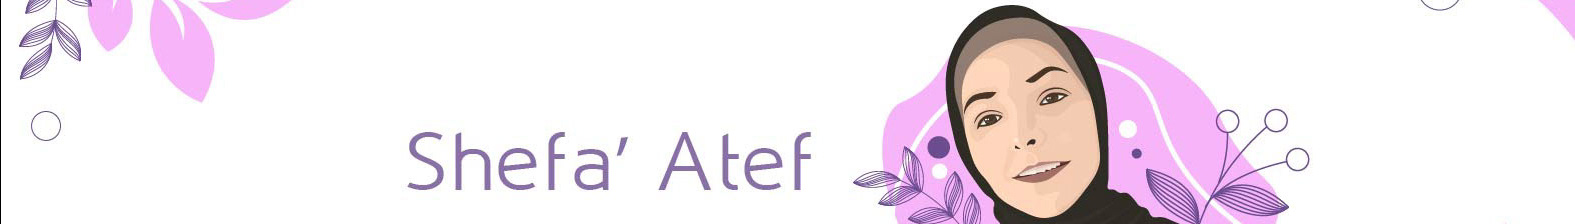 Shefa' Alhendi profil başlığı